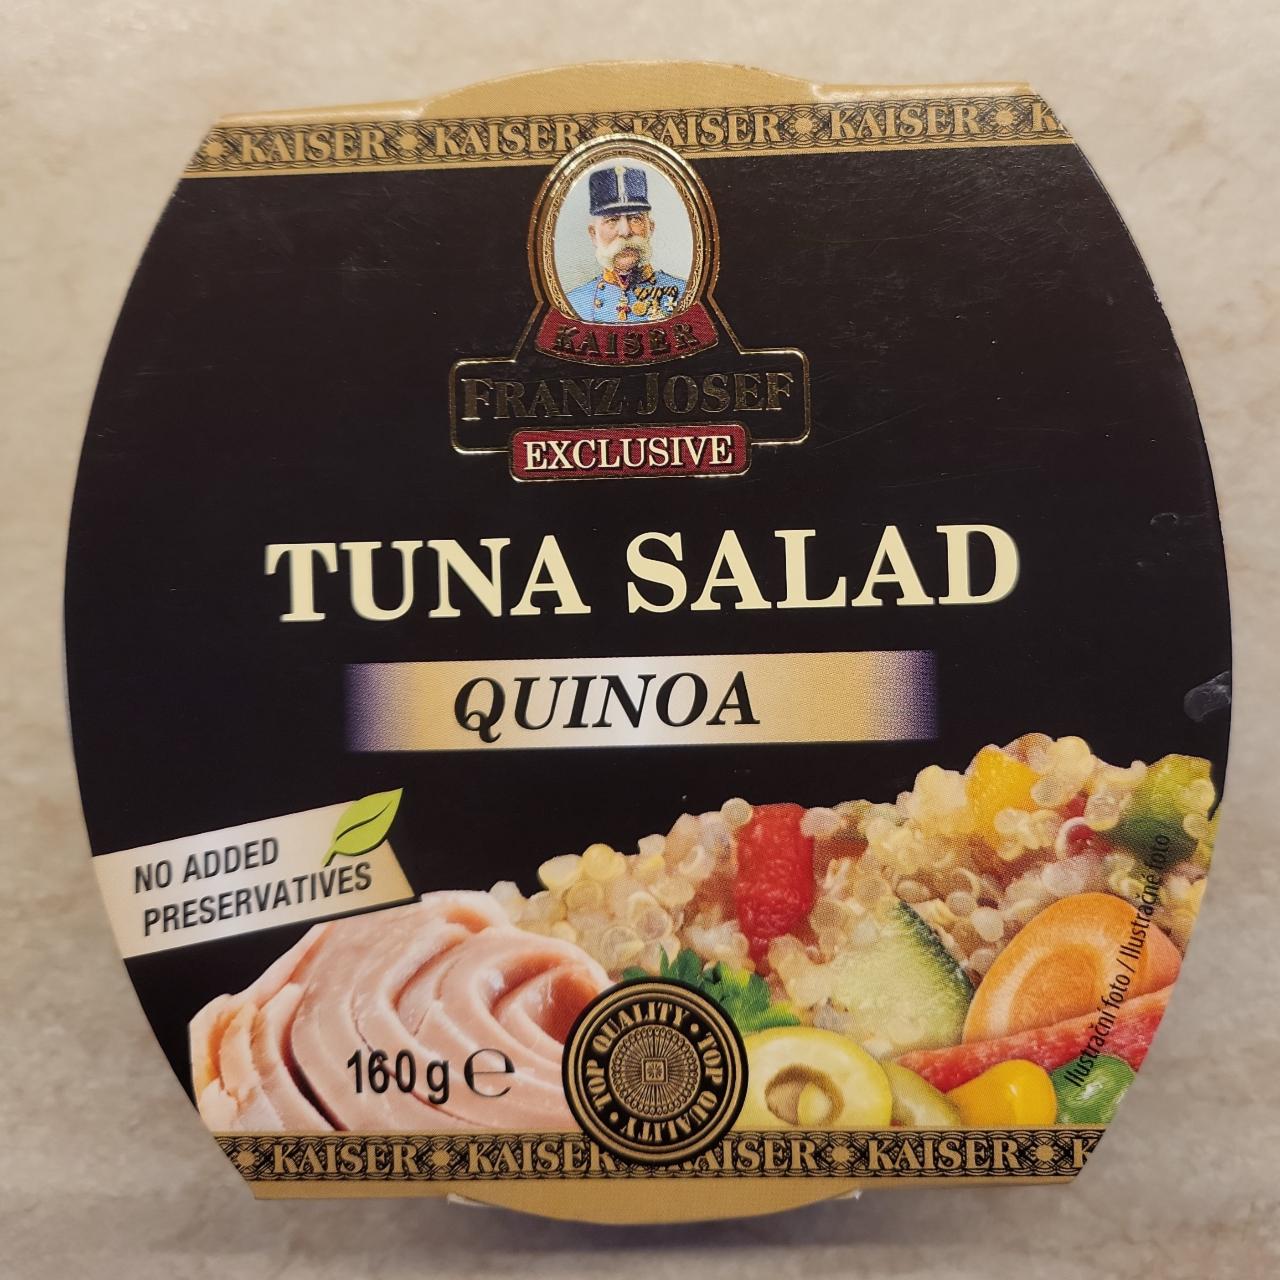 Fotografie - Tuna Salad Quinoa Kaiser Franz Josef Exclusive